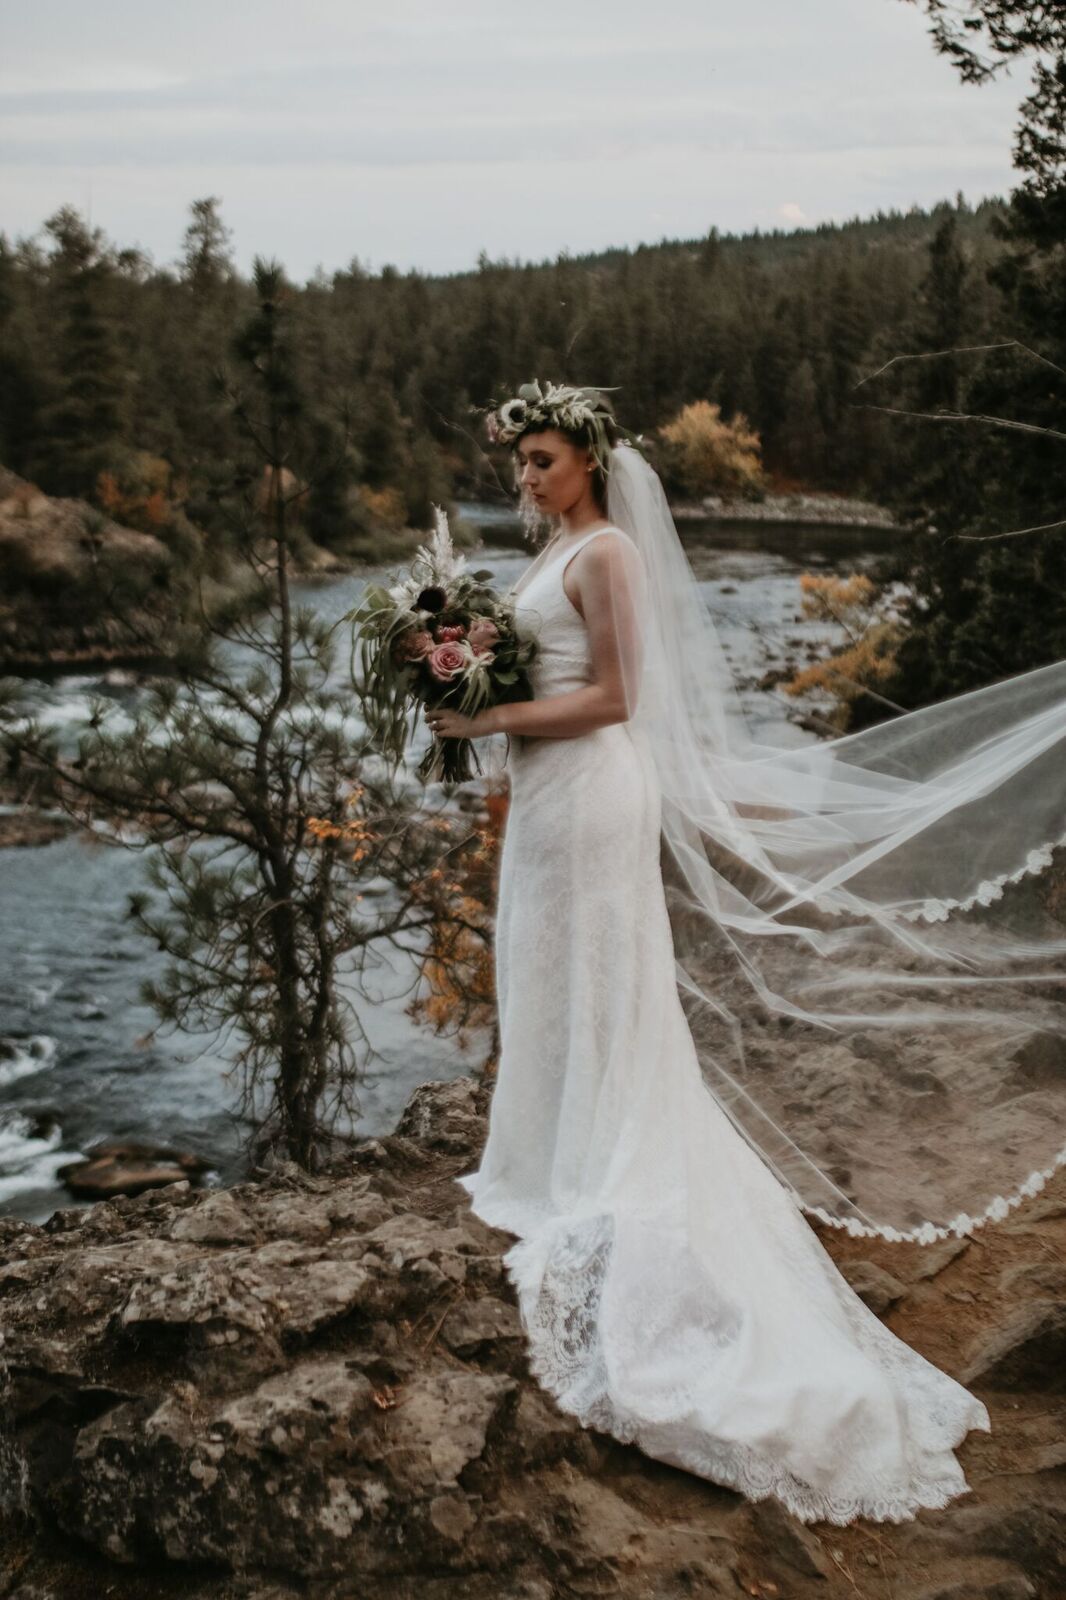 spokane river wedding photo shoot image12